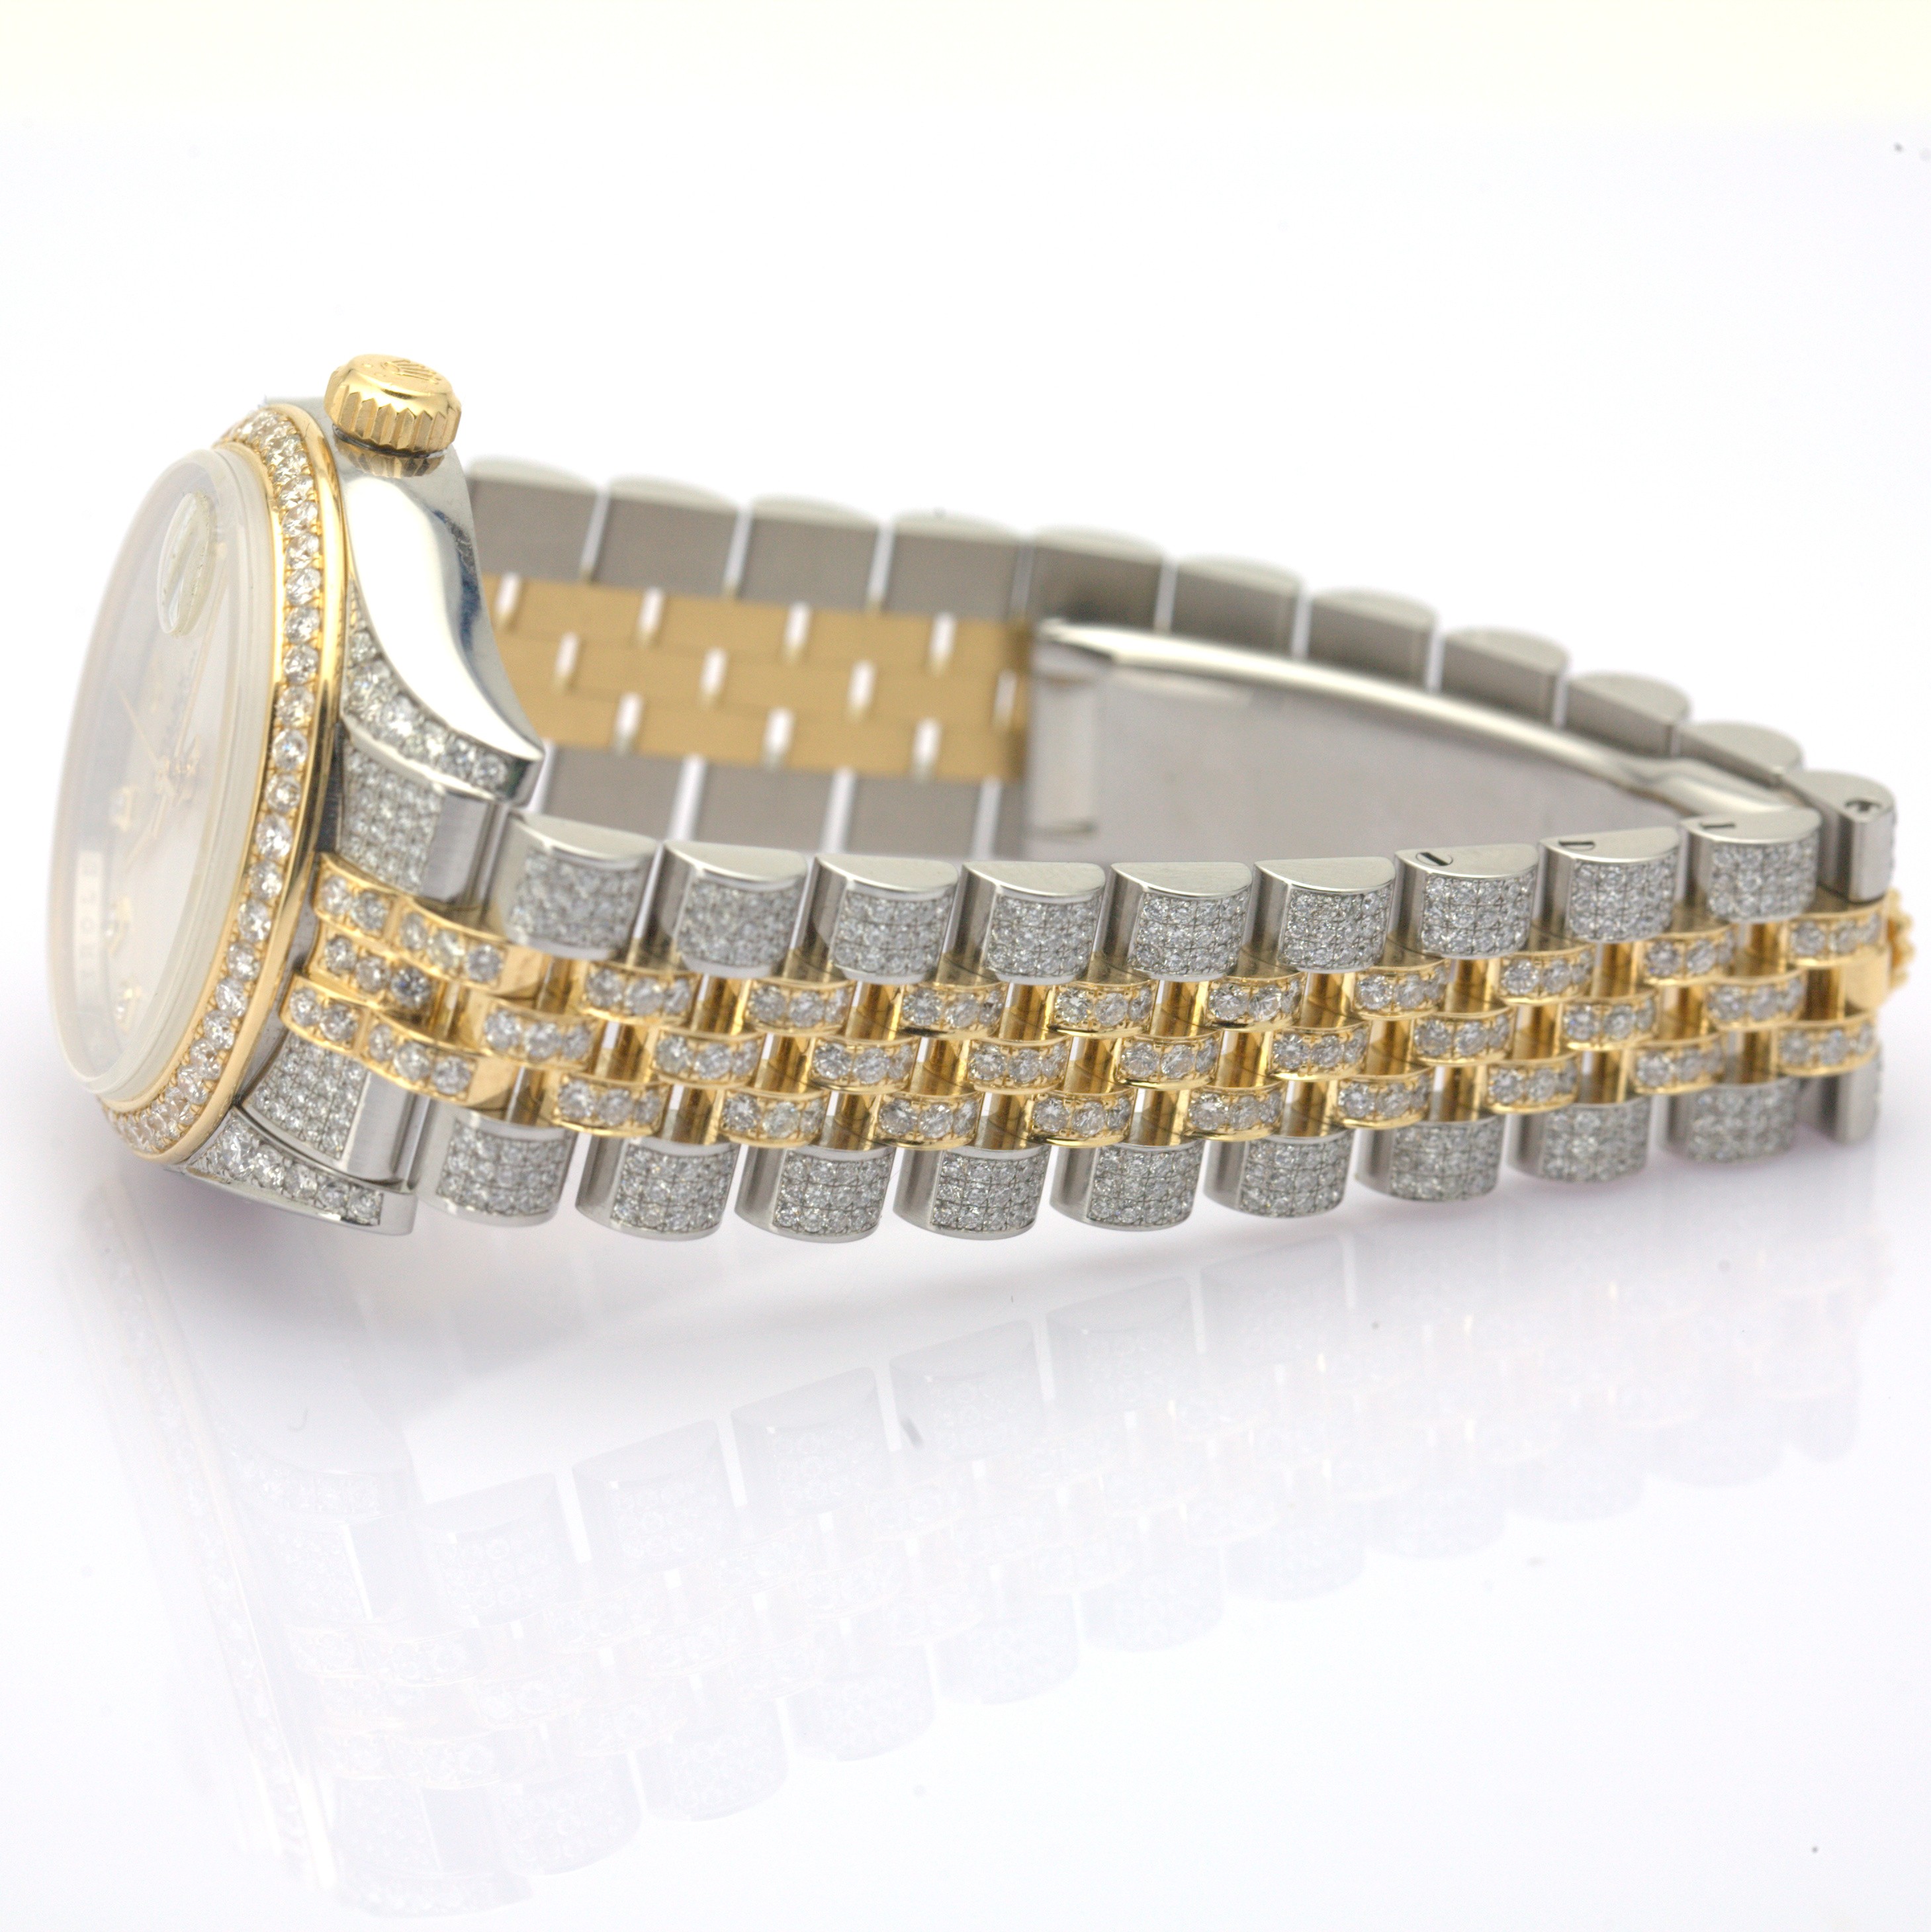 Chopard / Classic - 18K Gold - Ultra Thin - Unisex Yellow gold Wrist Watch - Image 4 of 12